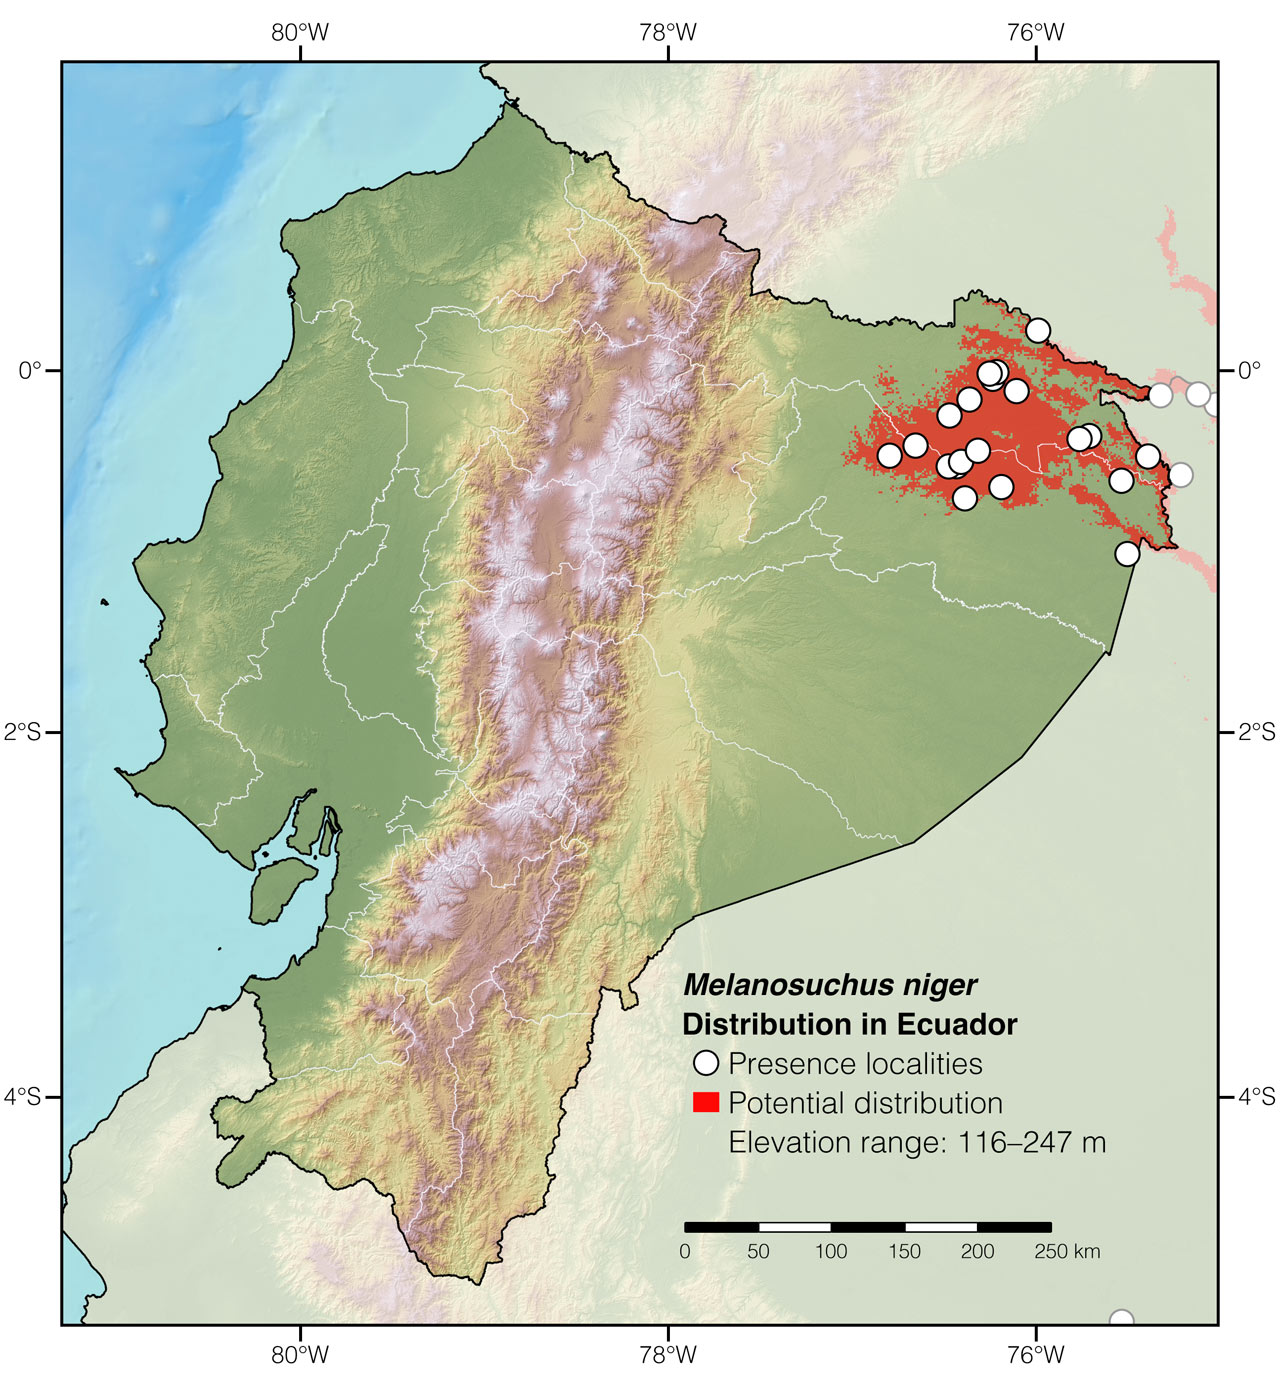 Distribution of Melanosuchus niger in Ecuador